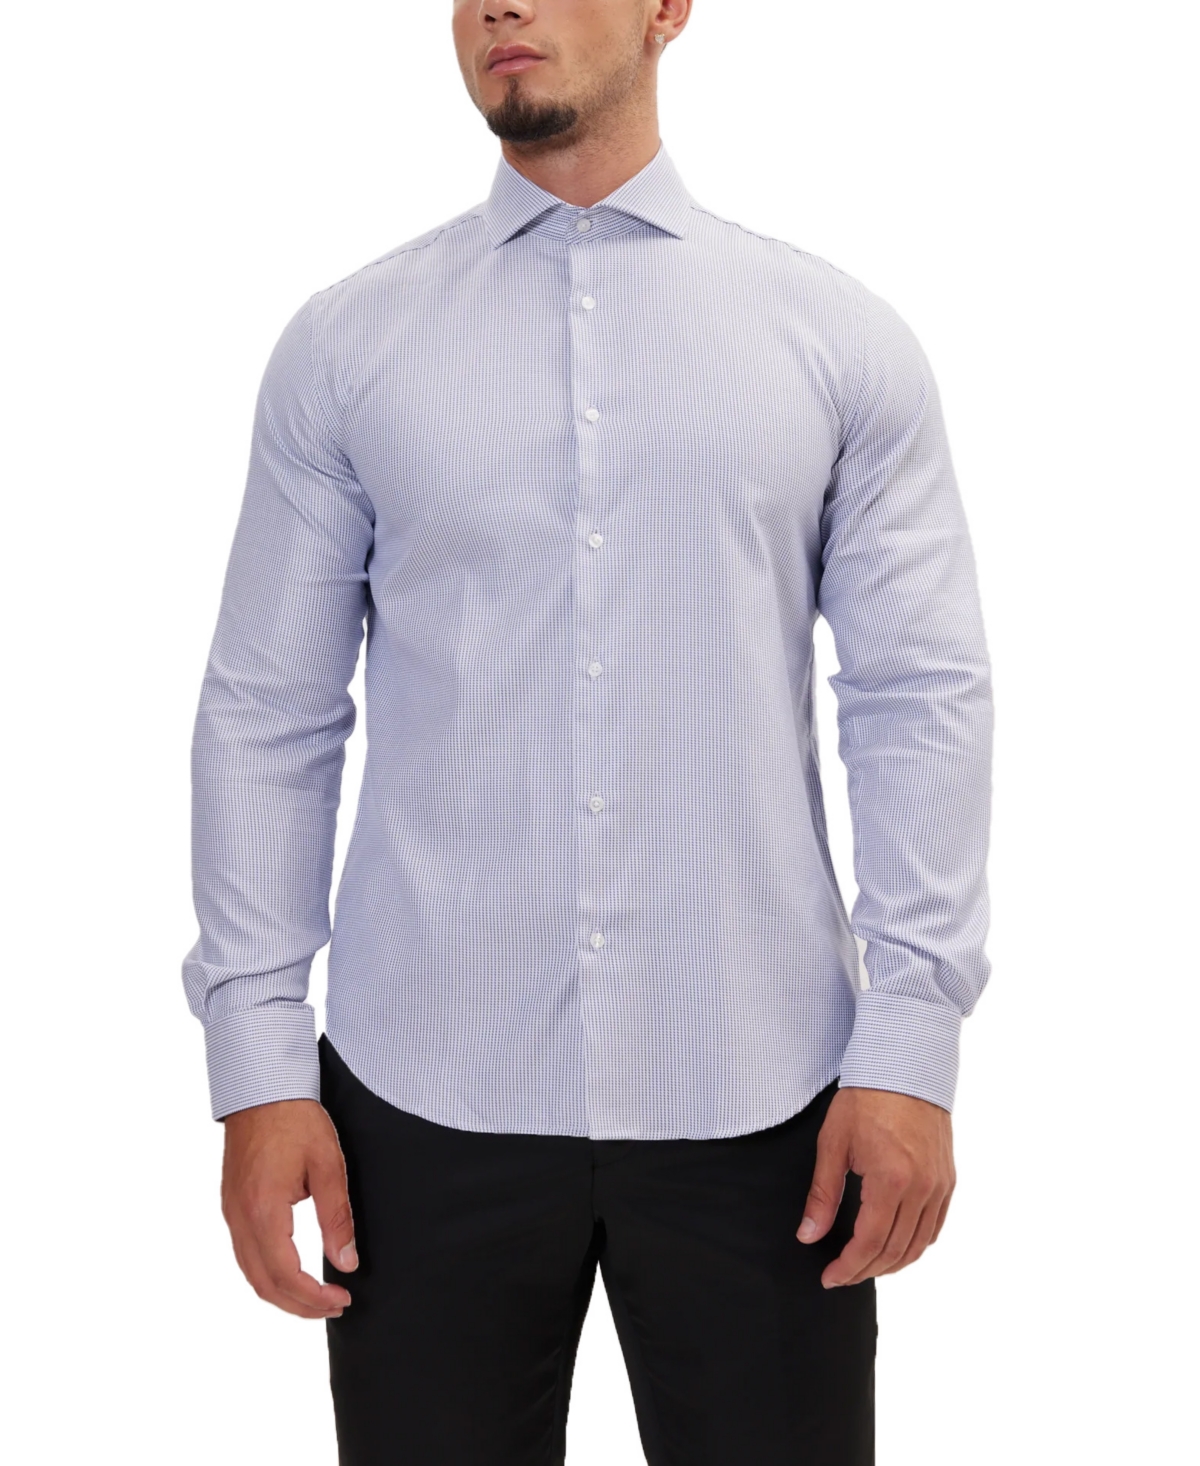 Men's Modern Spread Collar Textured Fitted Shirt - Navy White-